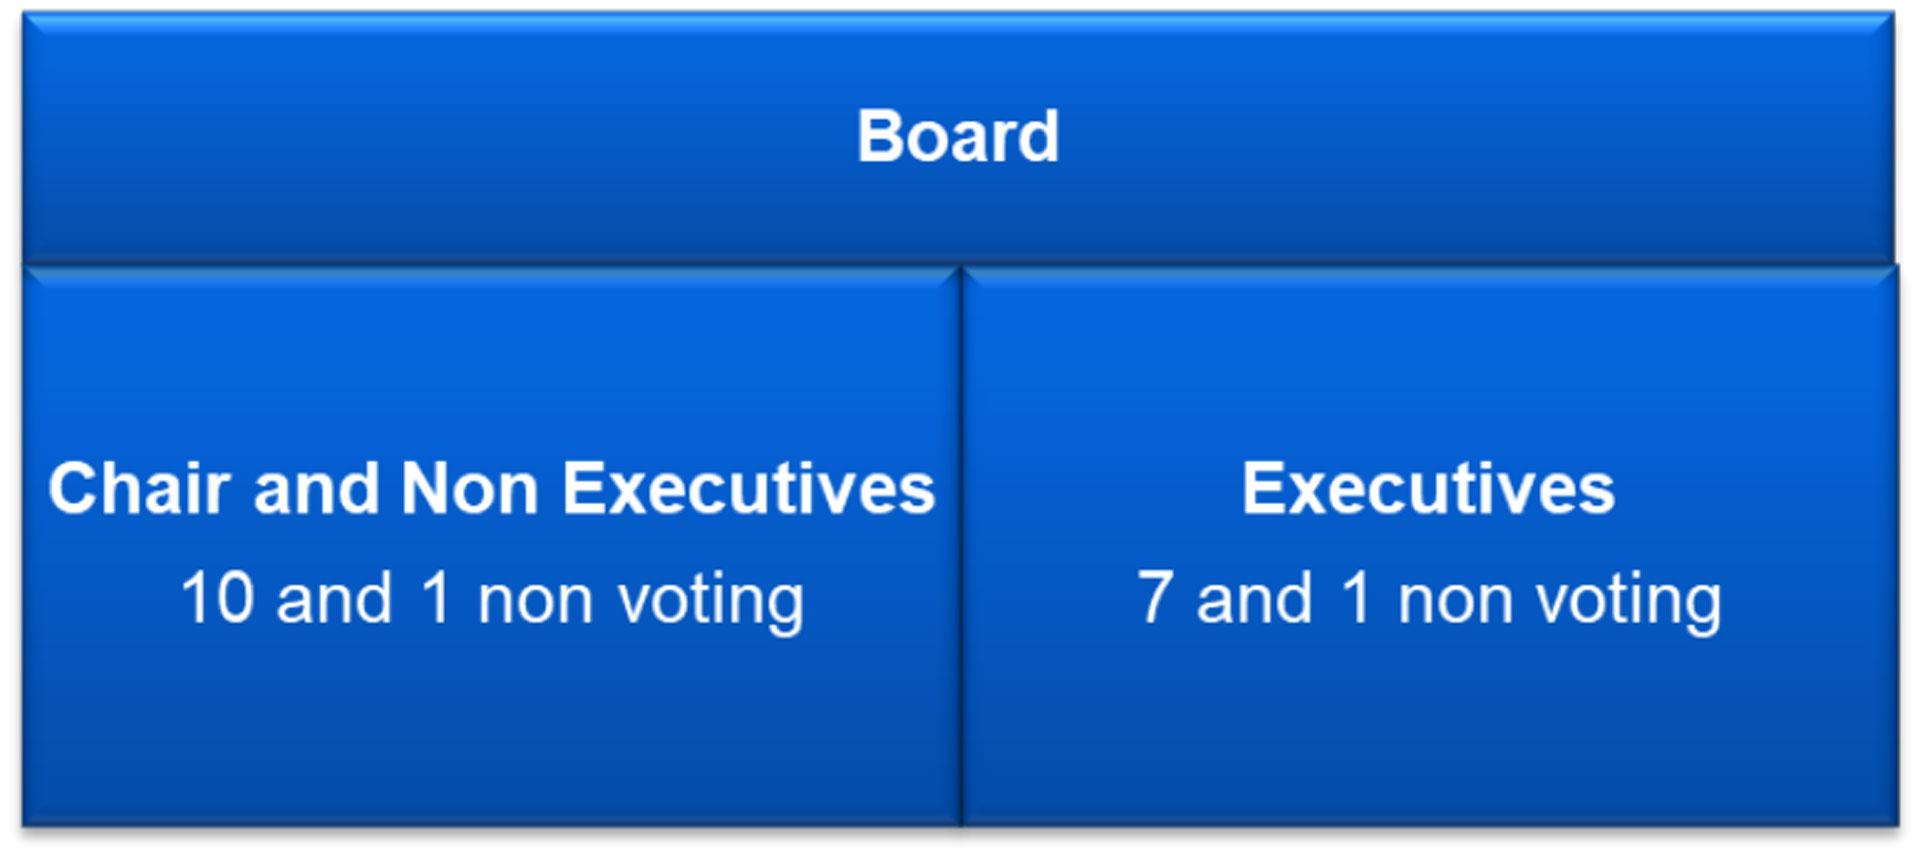 Board Composition